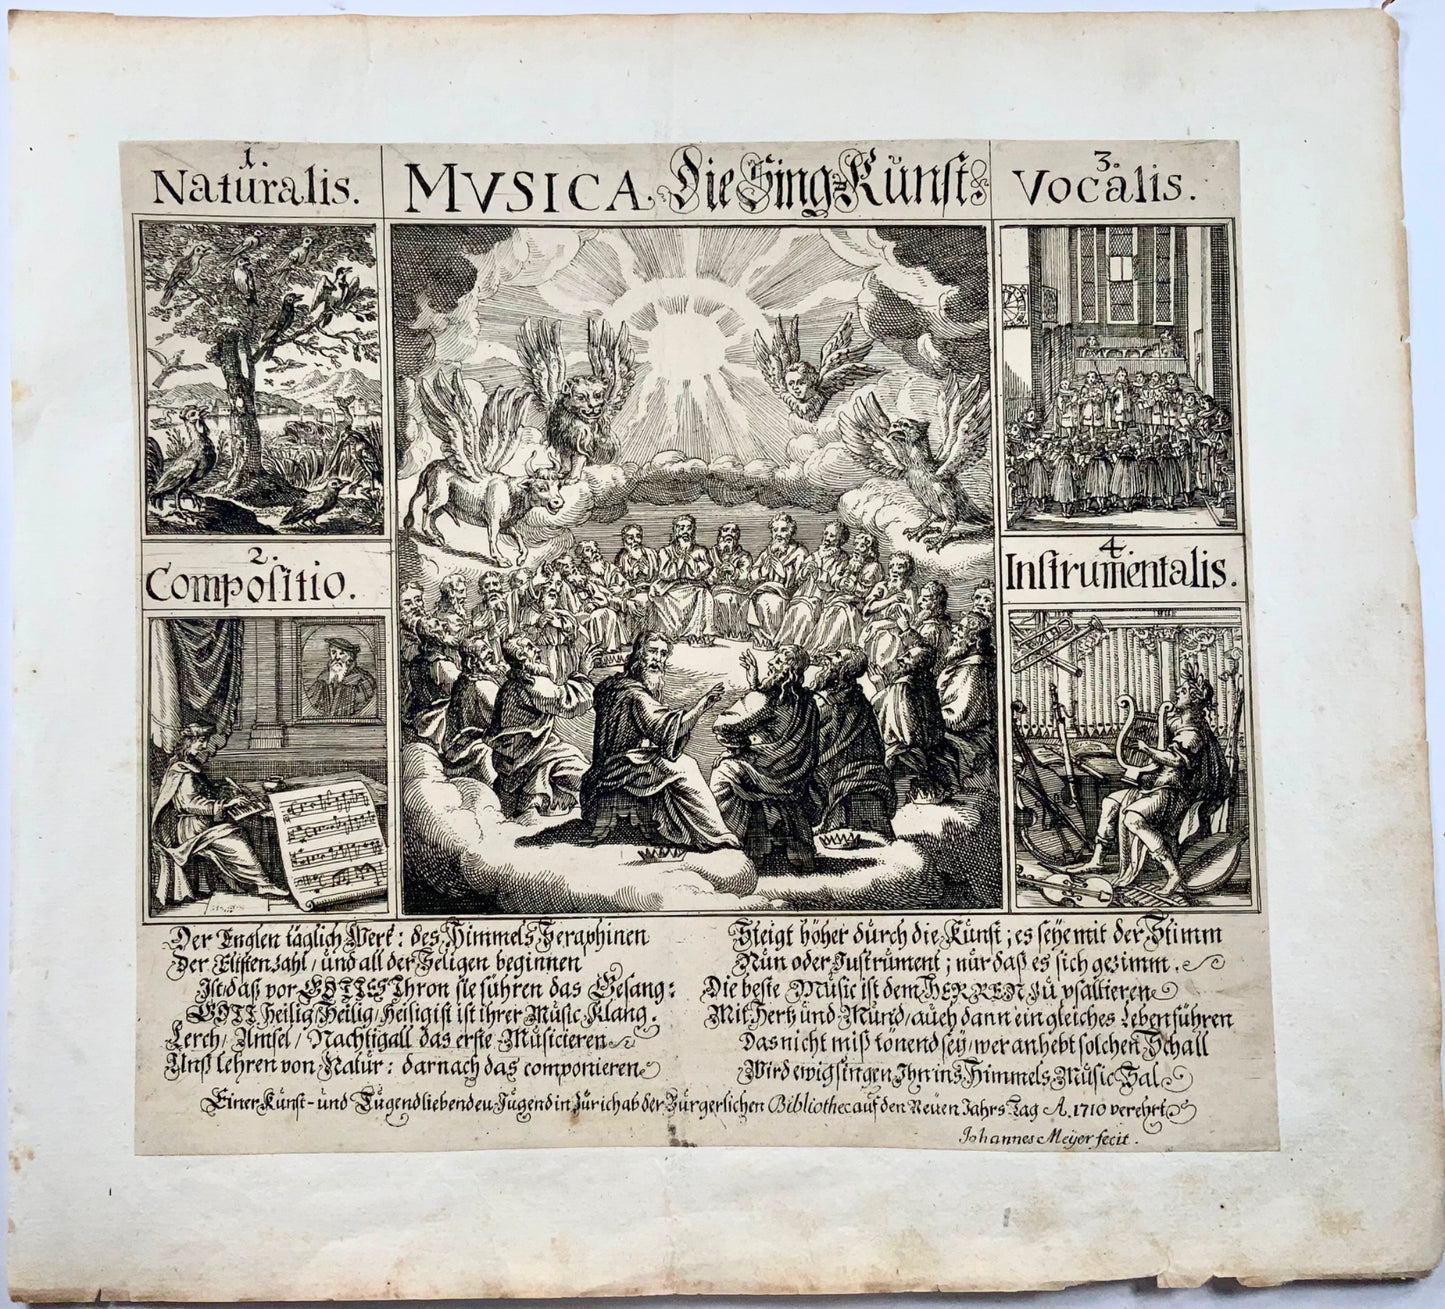 1710 Joh. Meyer, Broadside dedicated to Music, Art of Singing, composition